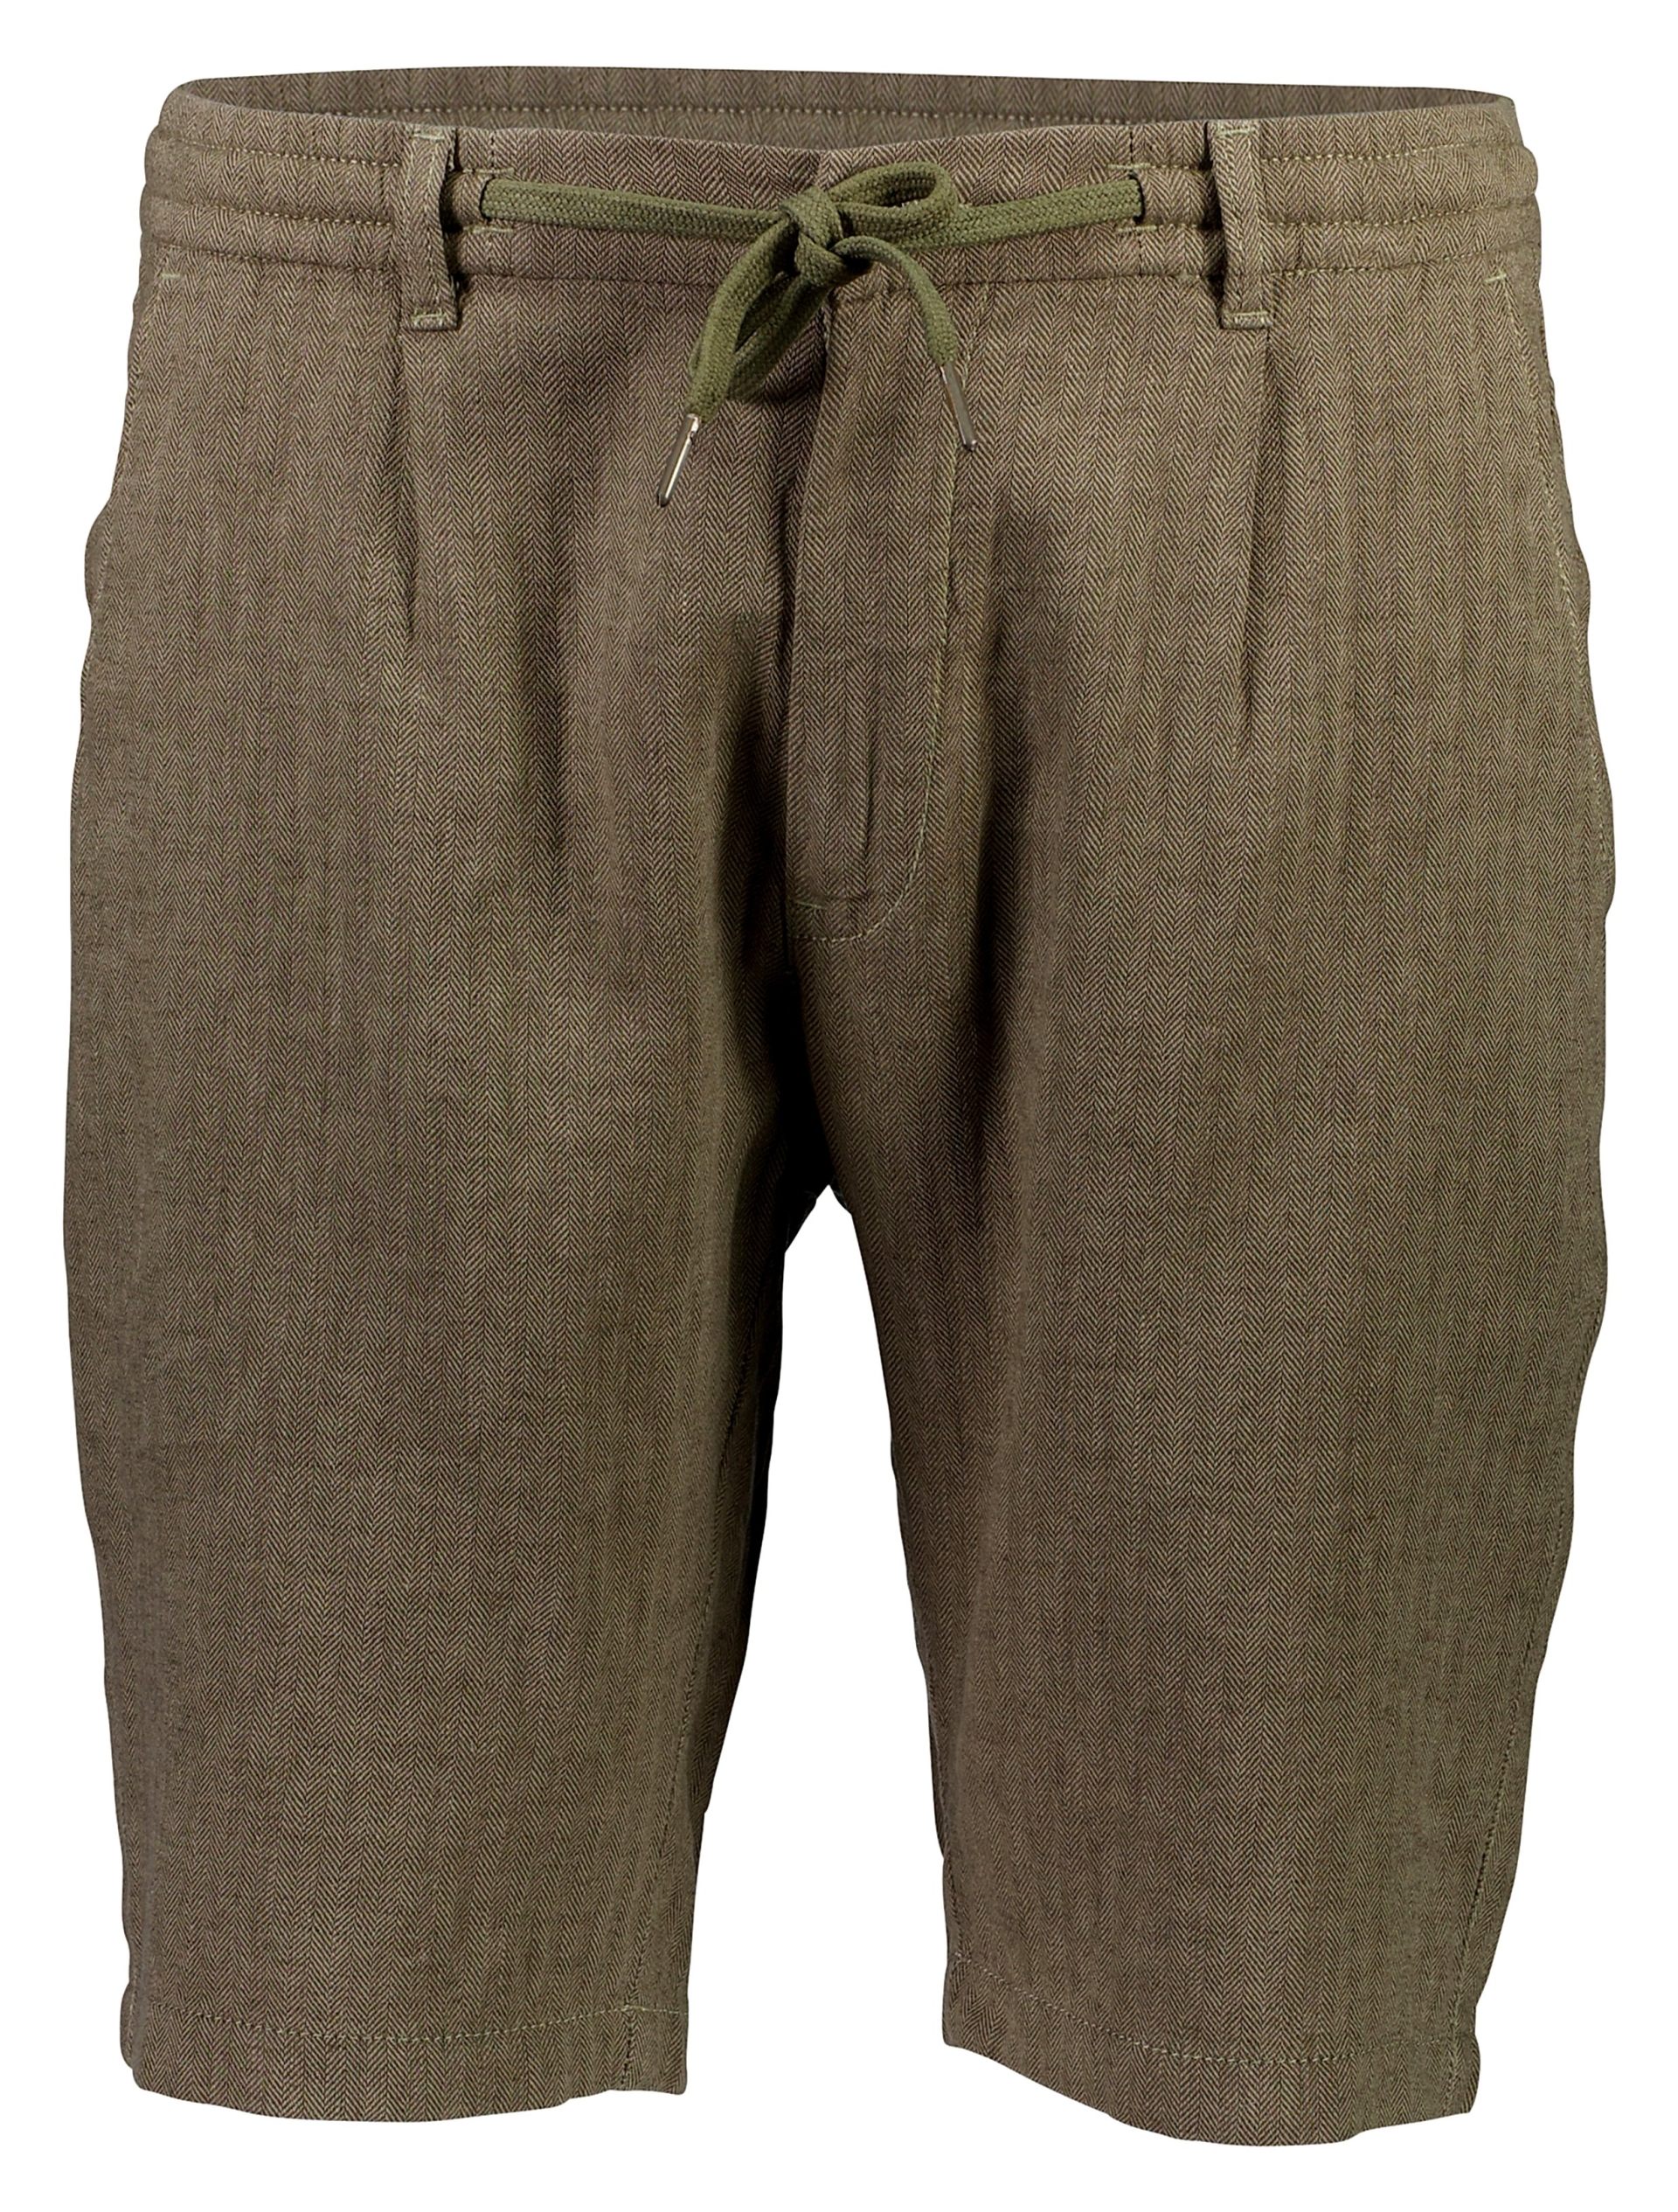 Lindbergh Linen shorts green / army